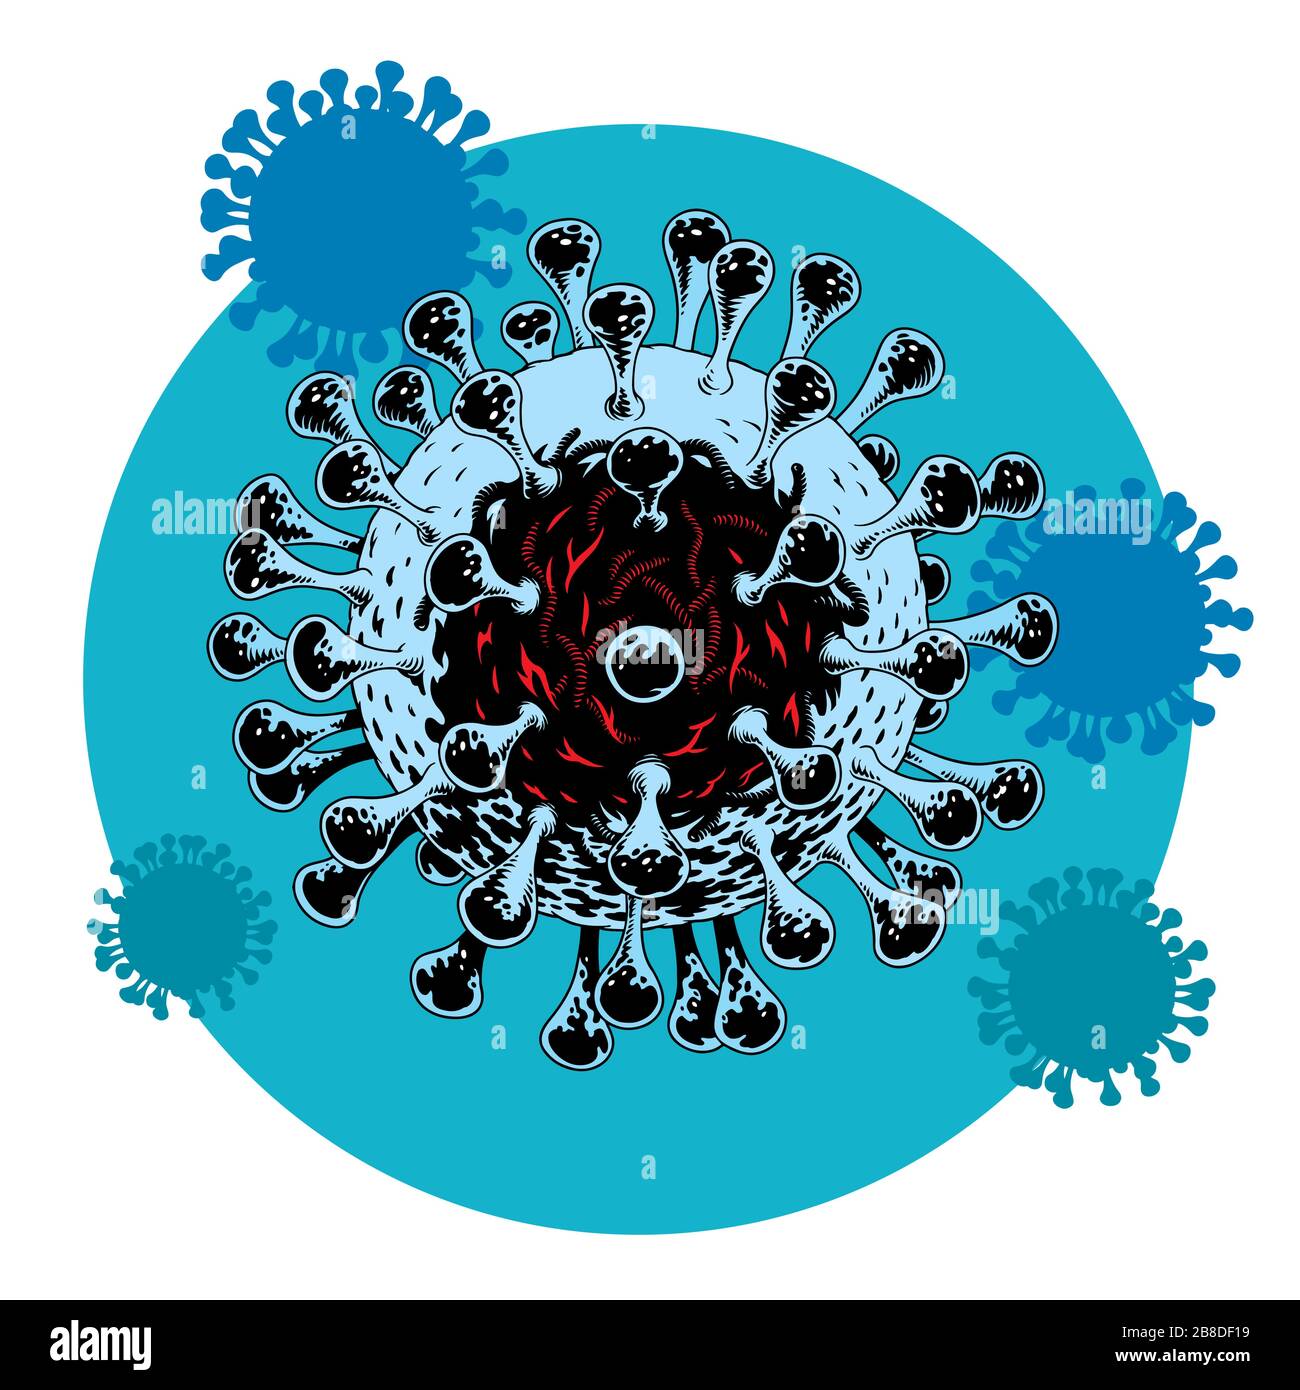 Coronavirus SARS-cov-2. Malattia di coronavirus COVID-19. Virus, batterio o germi stile fumetto illustrazione vettoriale. Illustrazione Vettoriale